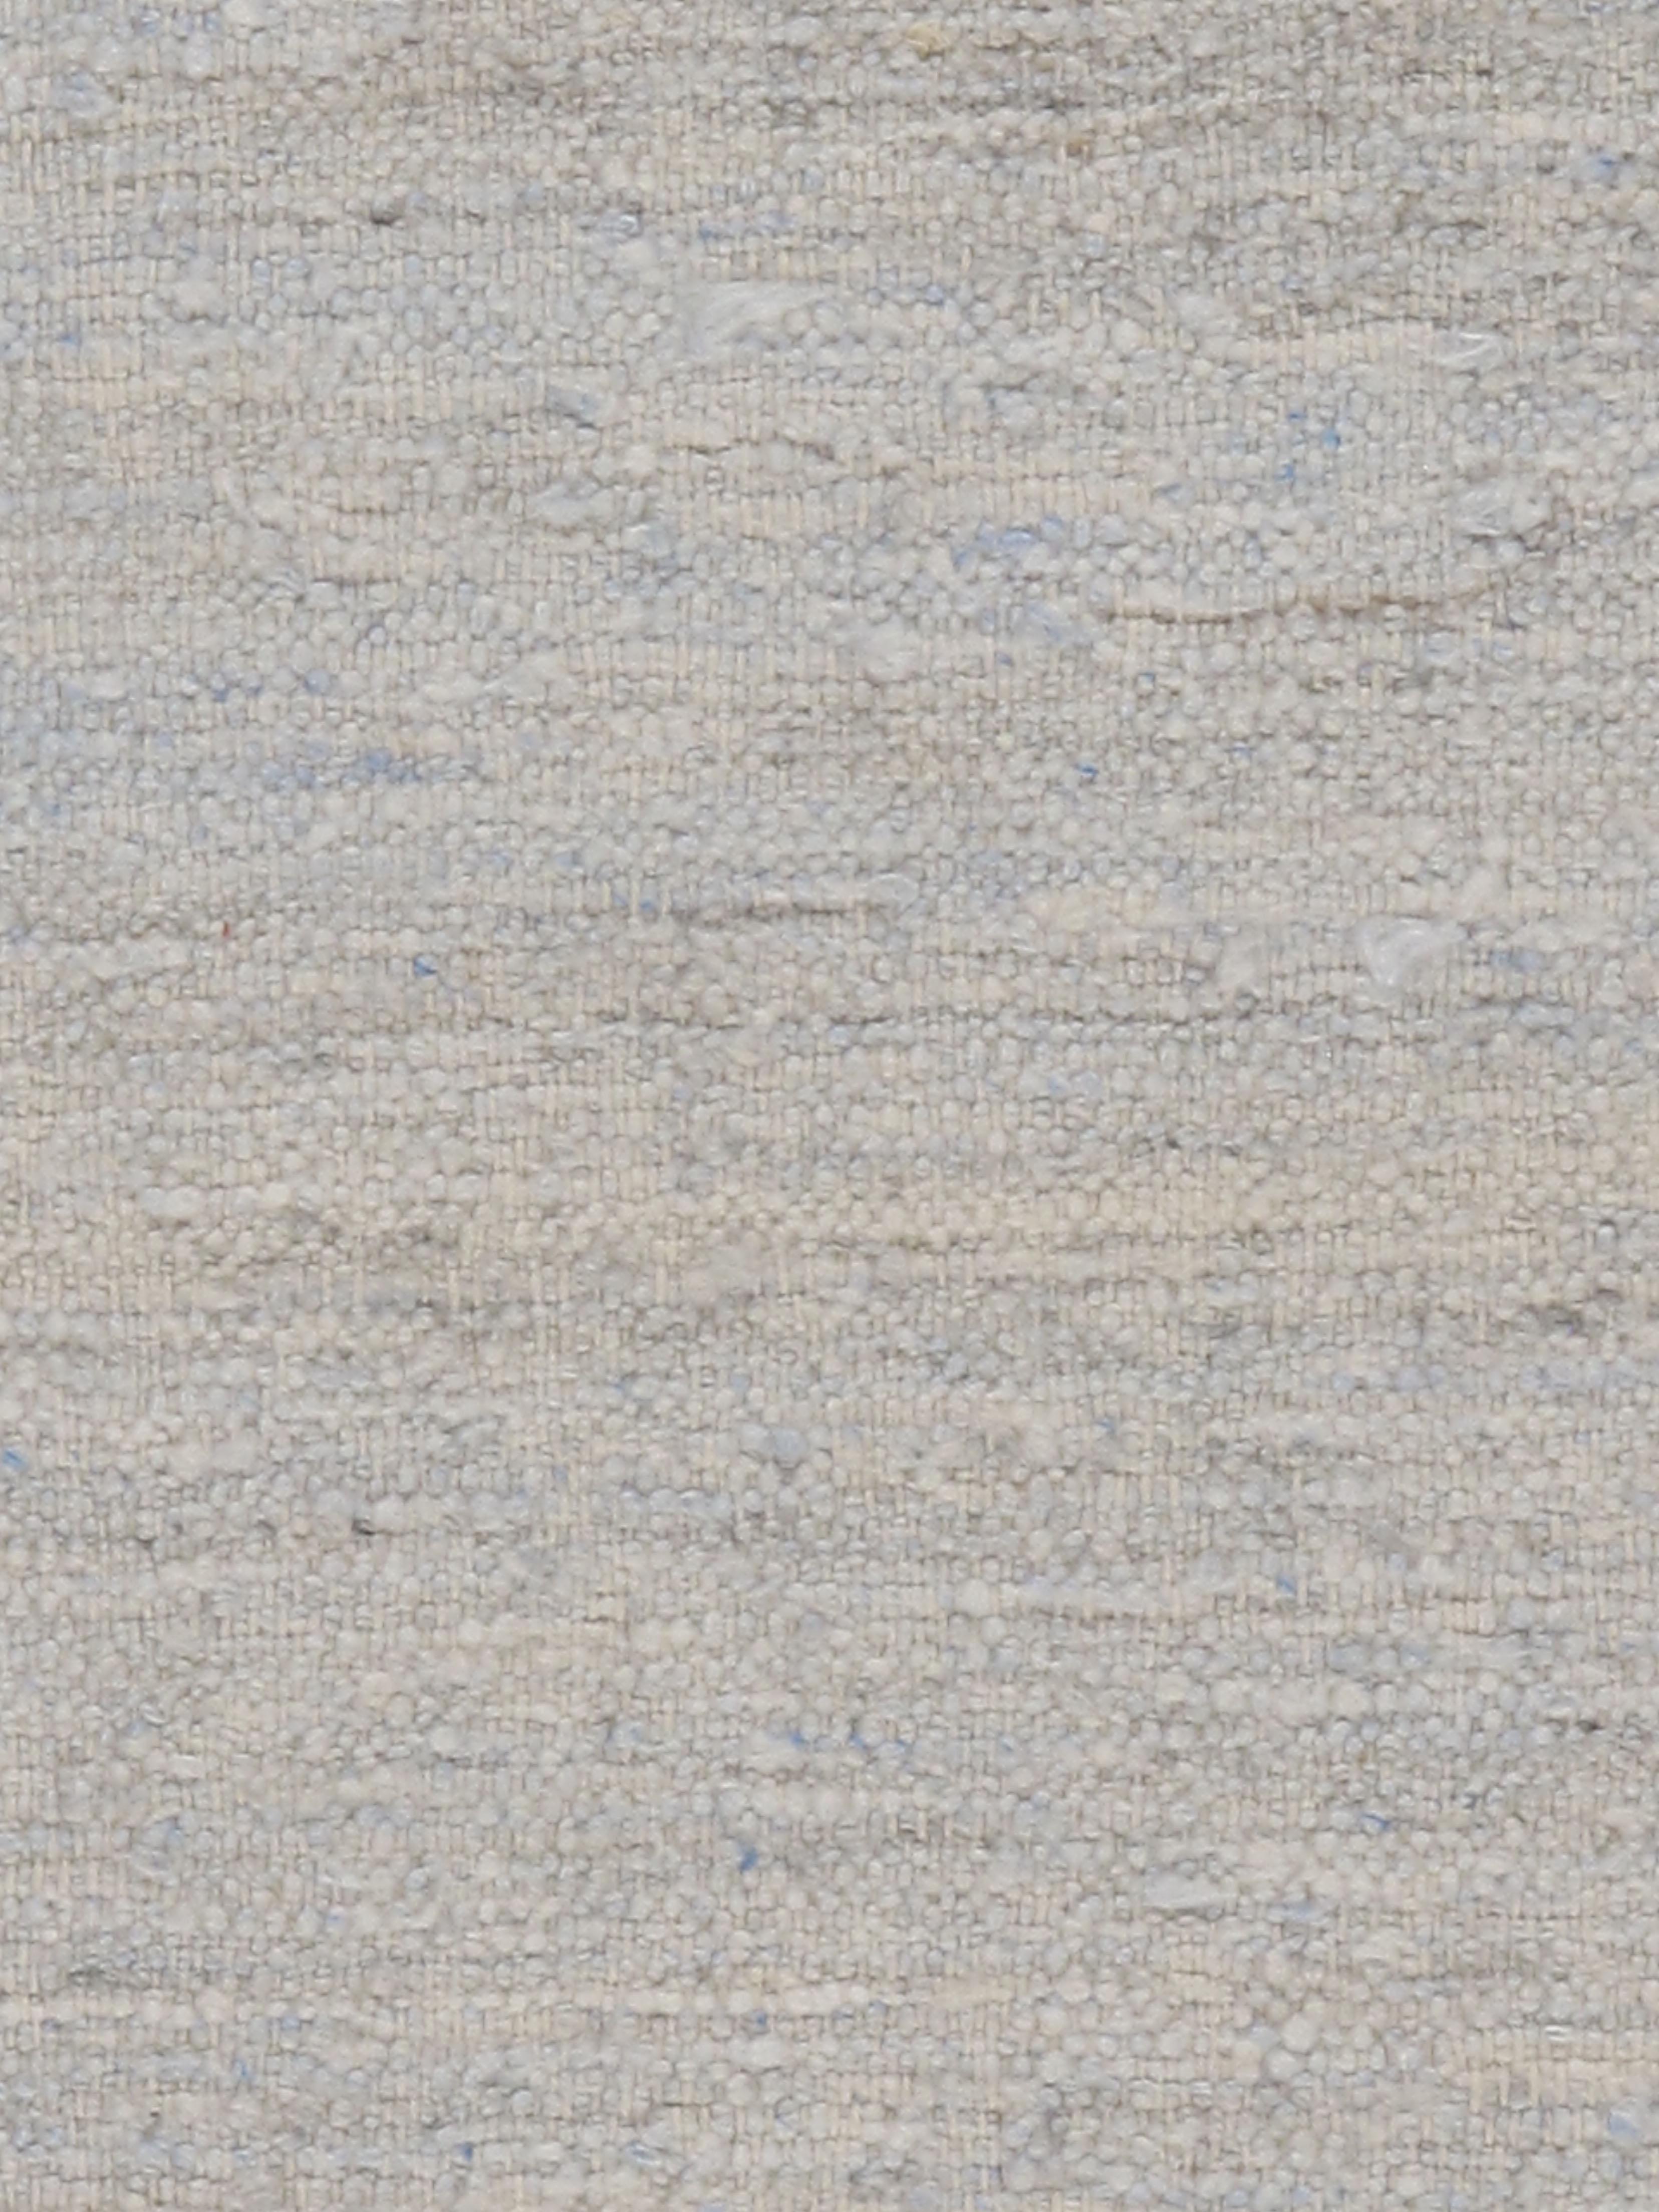 Kilim Scandinavian Swedish Style Flatweave Deco Rug Ivory Gray Blue 10'1x13'6 For Sale